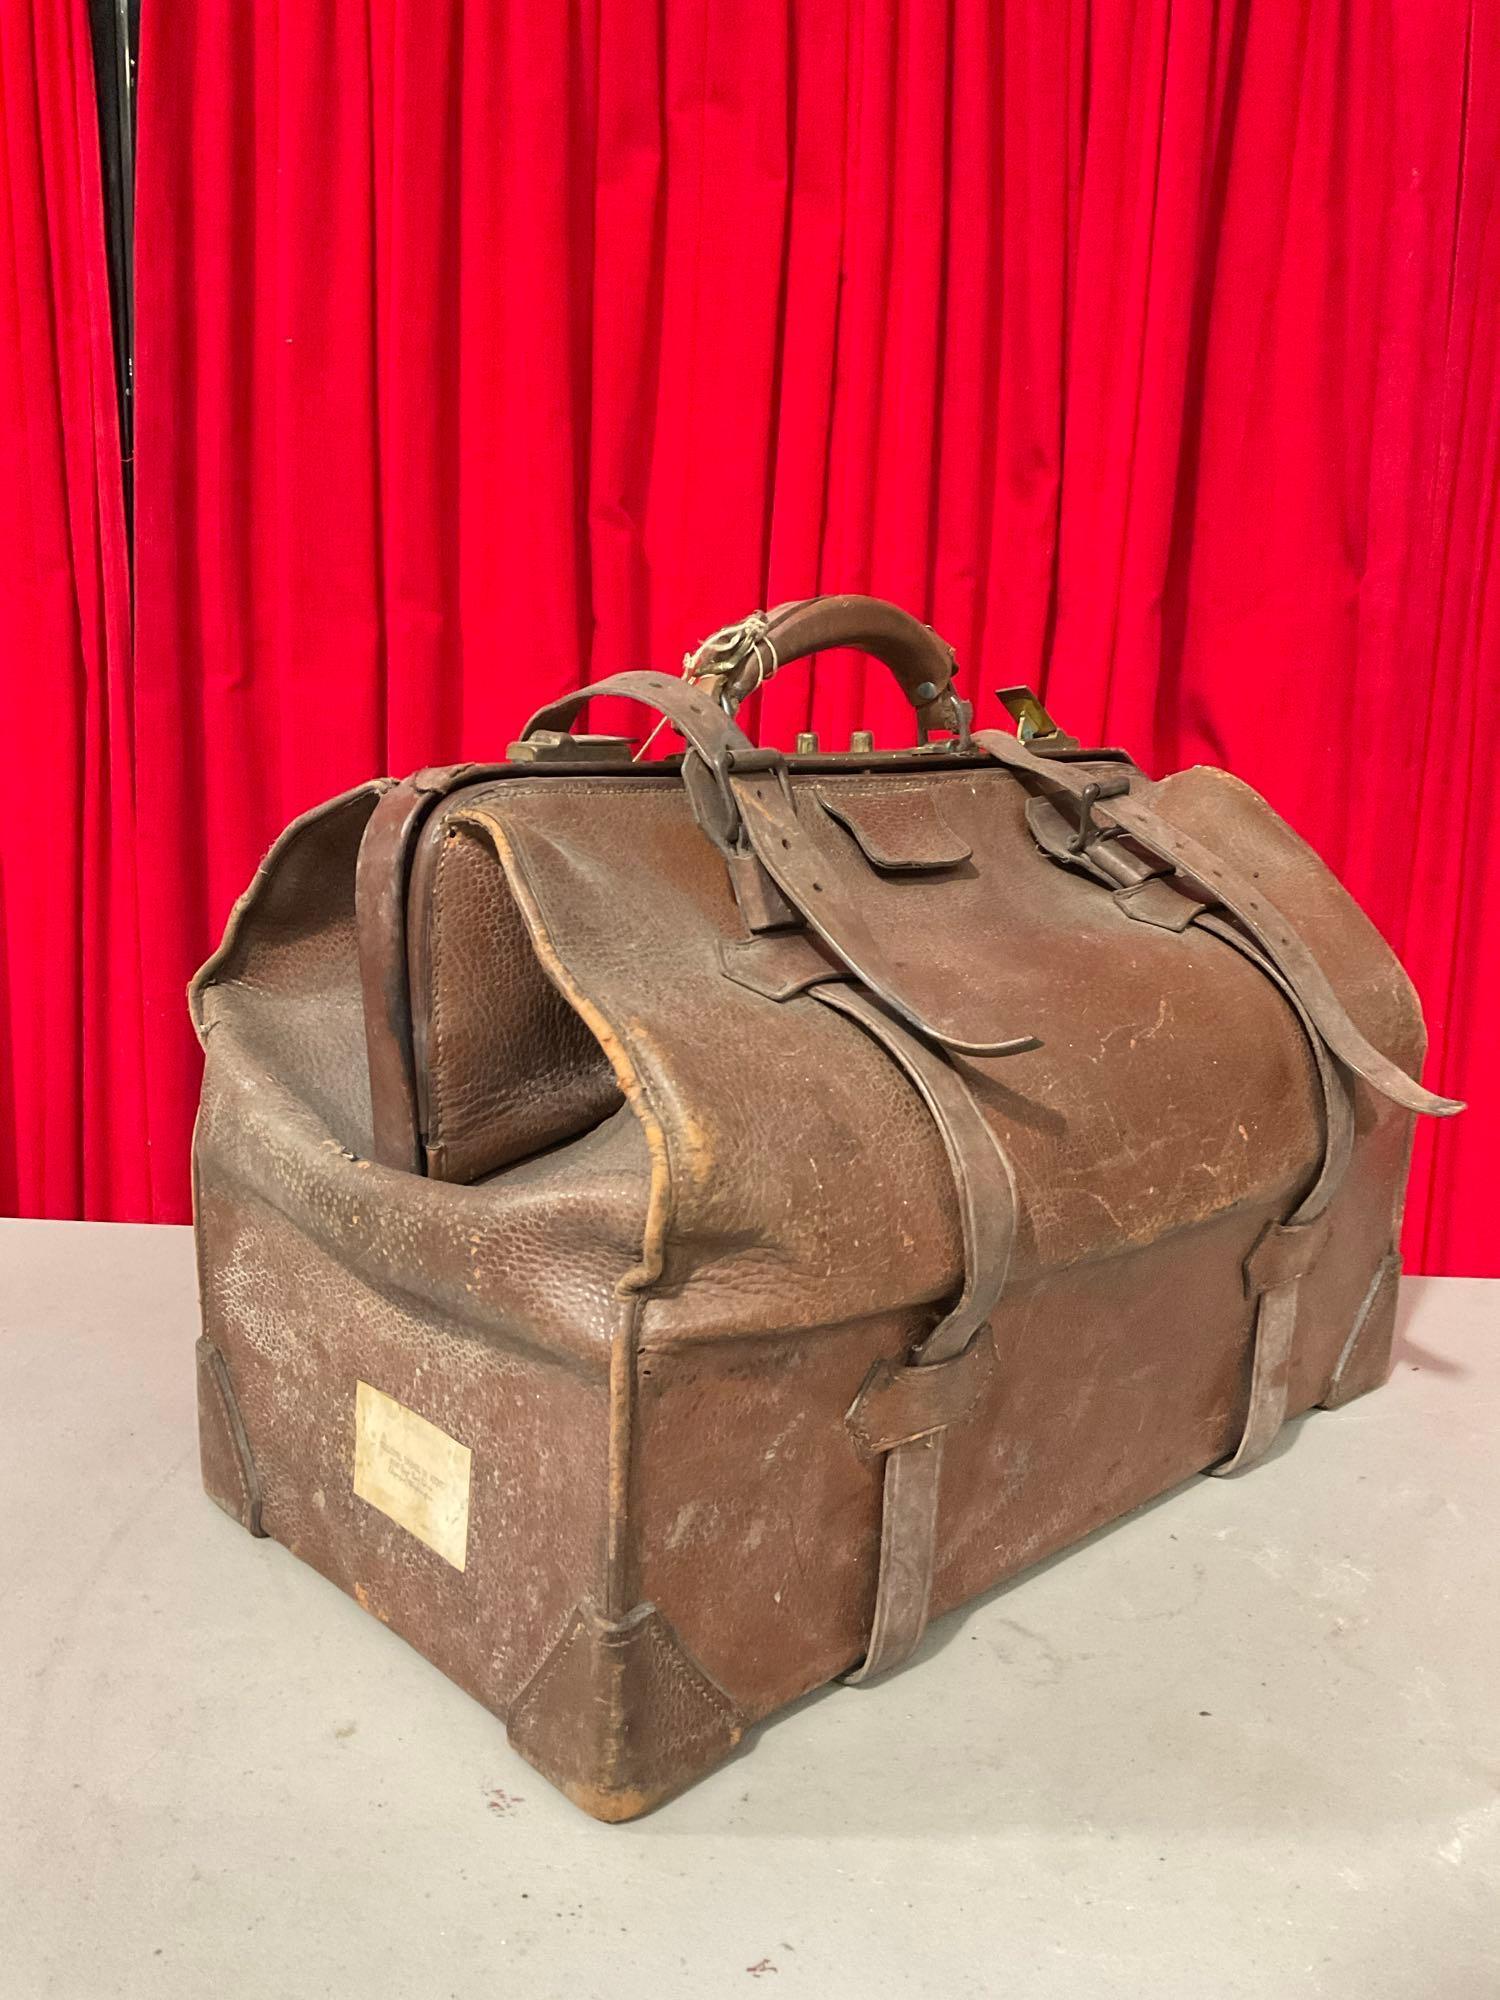 WWI / WWII Era Caramel Brown Leather Locking Men's carry bag w/ Key & Original Brass Accents.